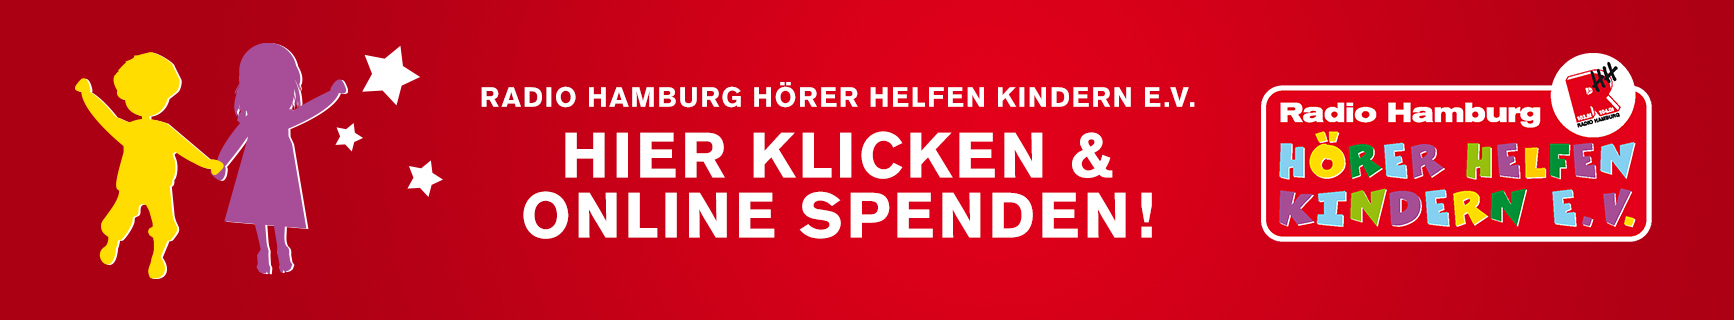 src=https://www.hoerer-helfen-kindern.de/wp-content/uploads/2019/11/HHK_Spenden-Banner-Weihnachten.jpg